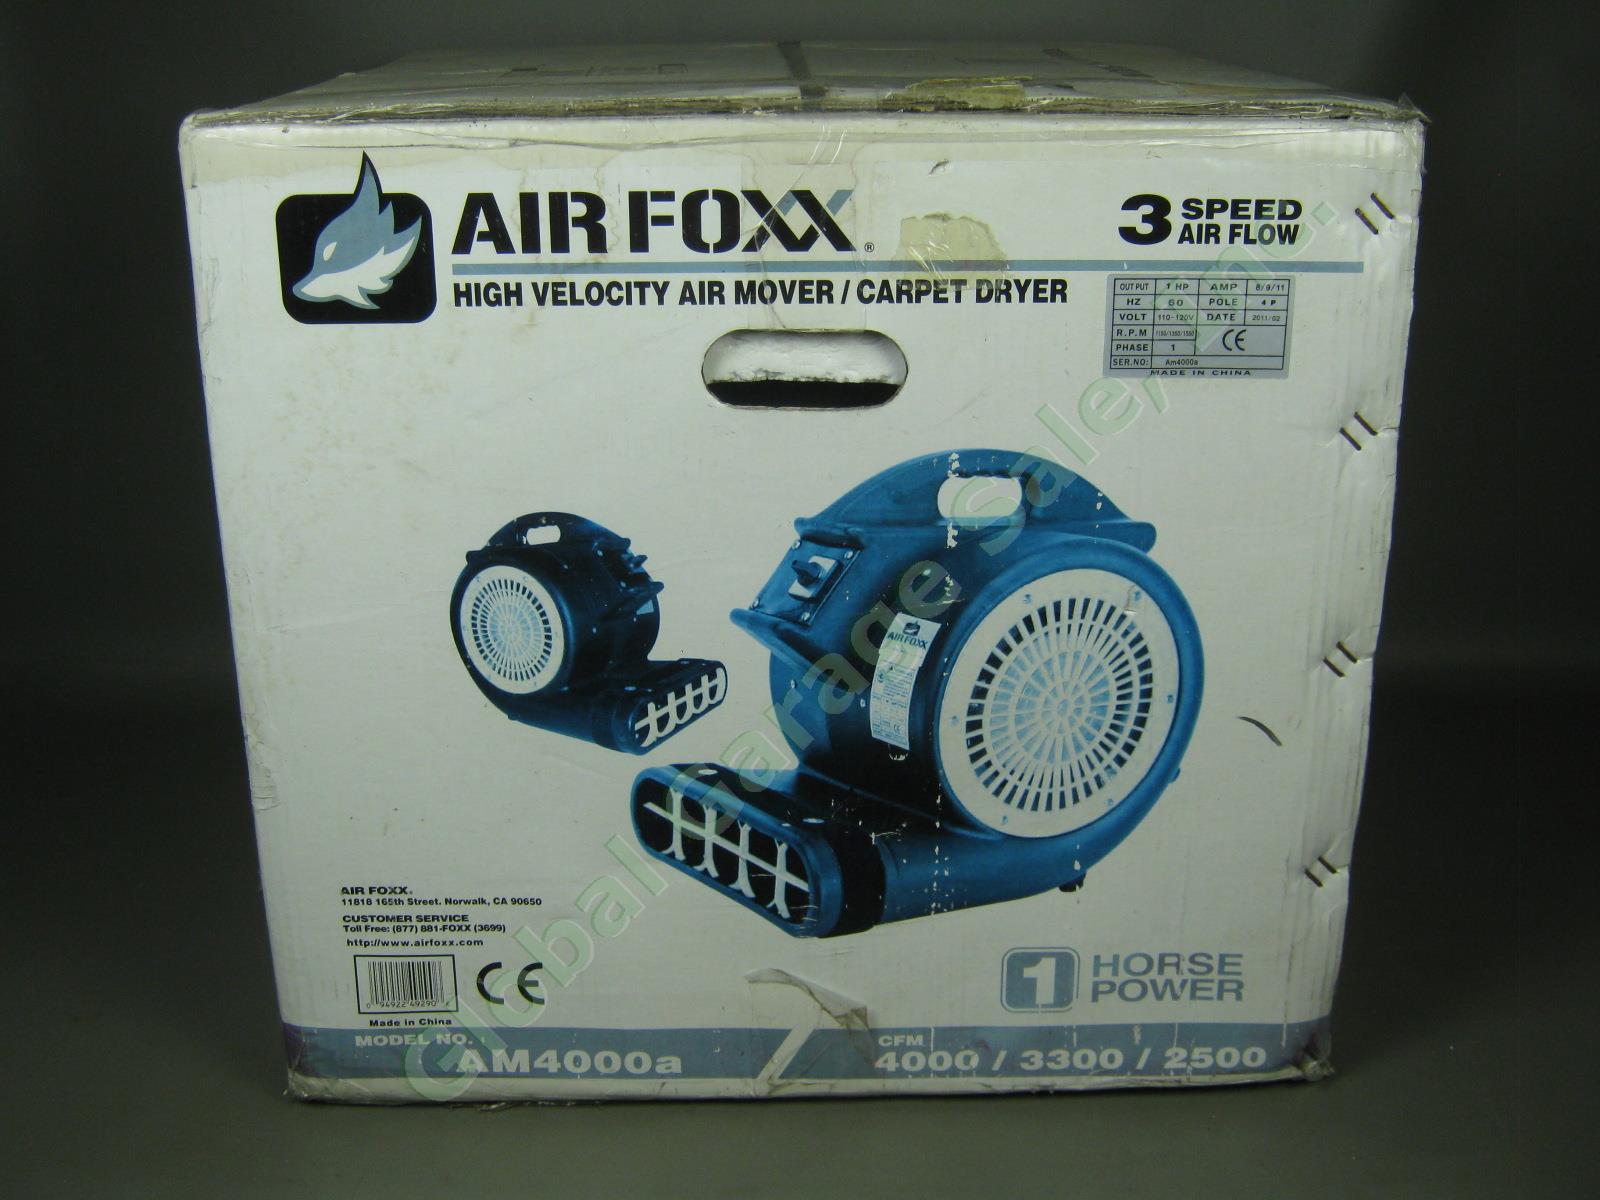 NOS Air Foxx 1HP 3 Speed Industrial Air Mover/Carpet Dryer Blower Fan 4000 CFM 3